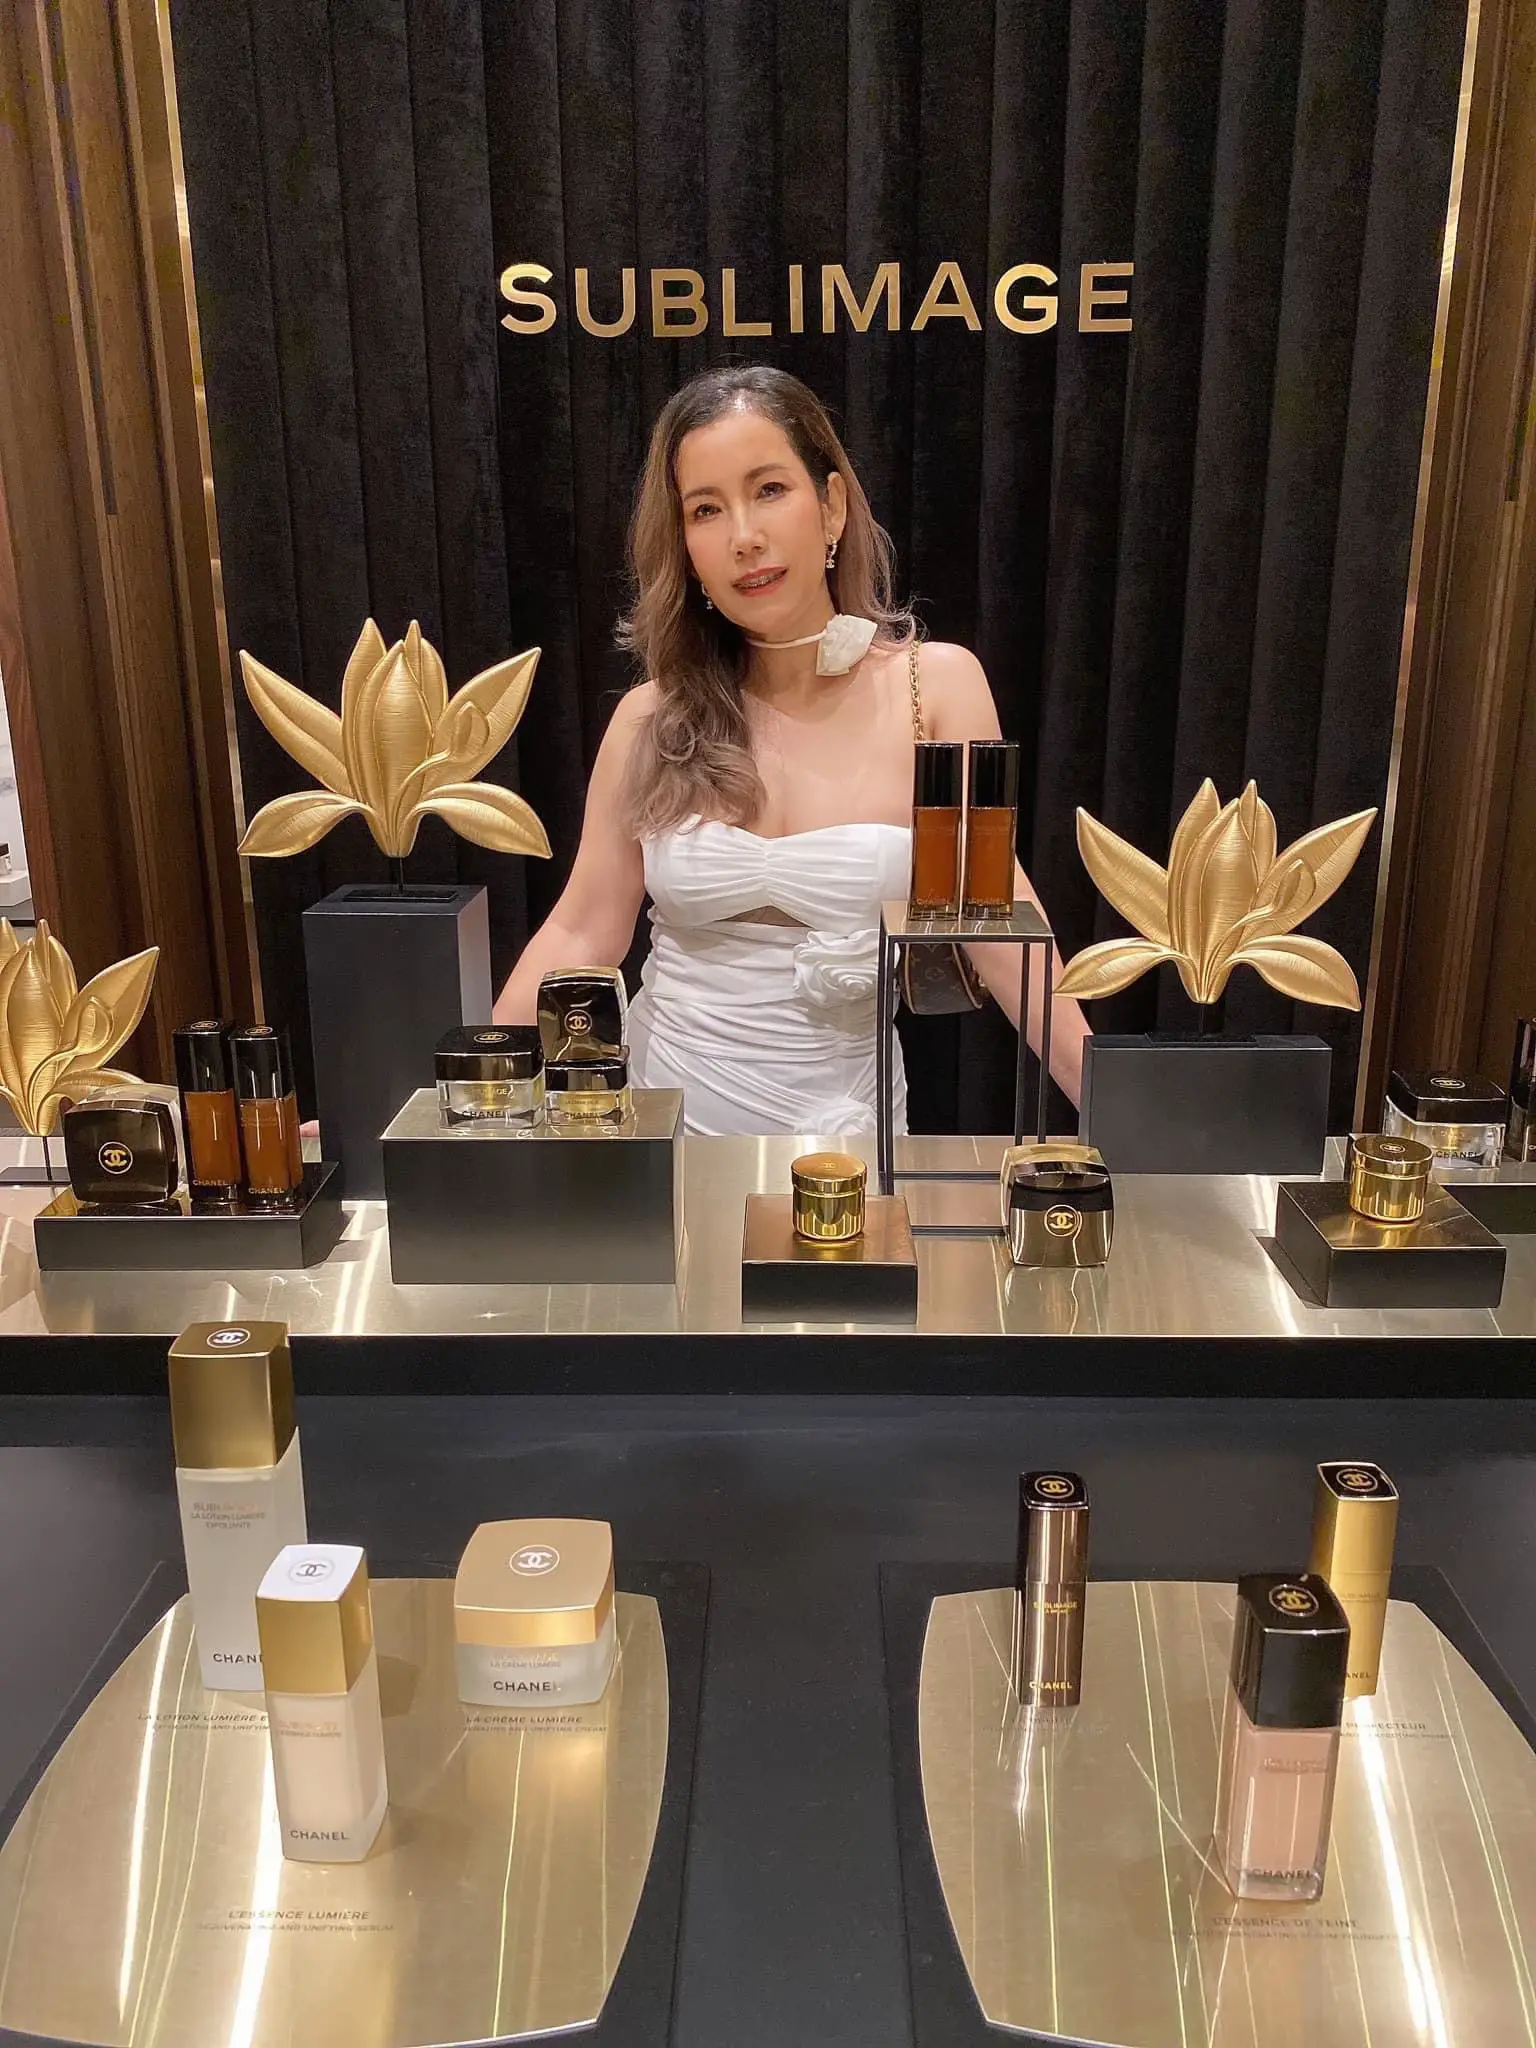 Chanel Sublimage L'Huile-En-Gel De Demaquillage - Cleansing Gel Oil for  Makeup Removal from Face and Eyes